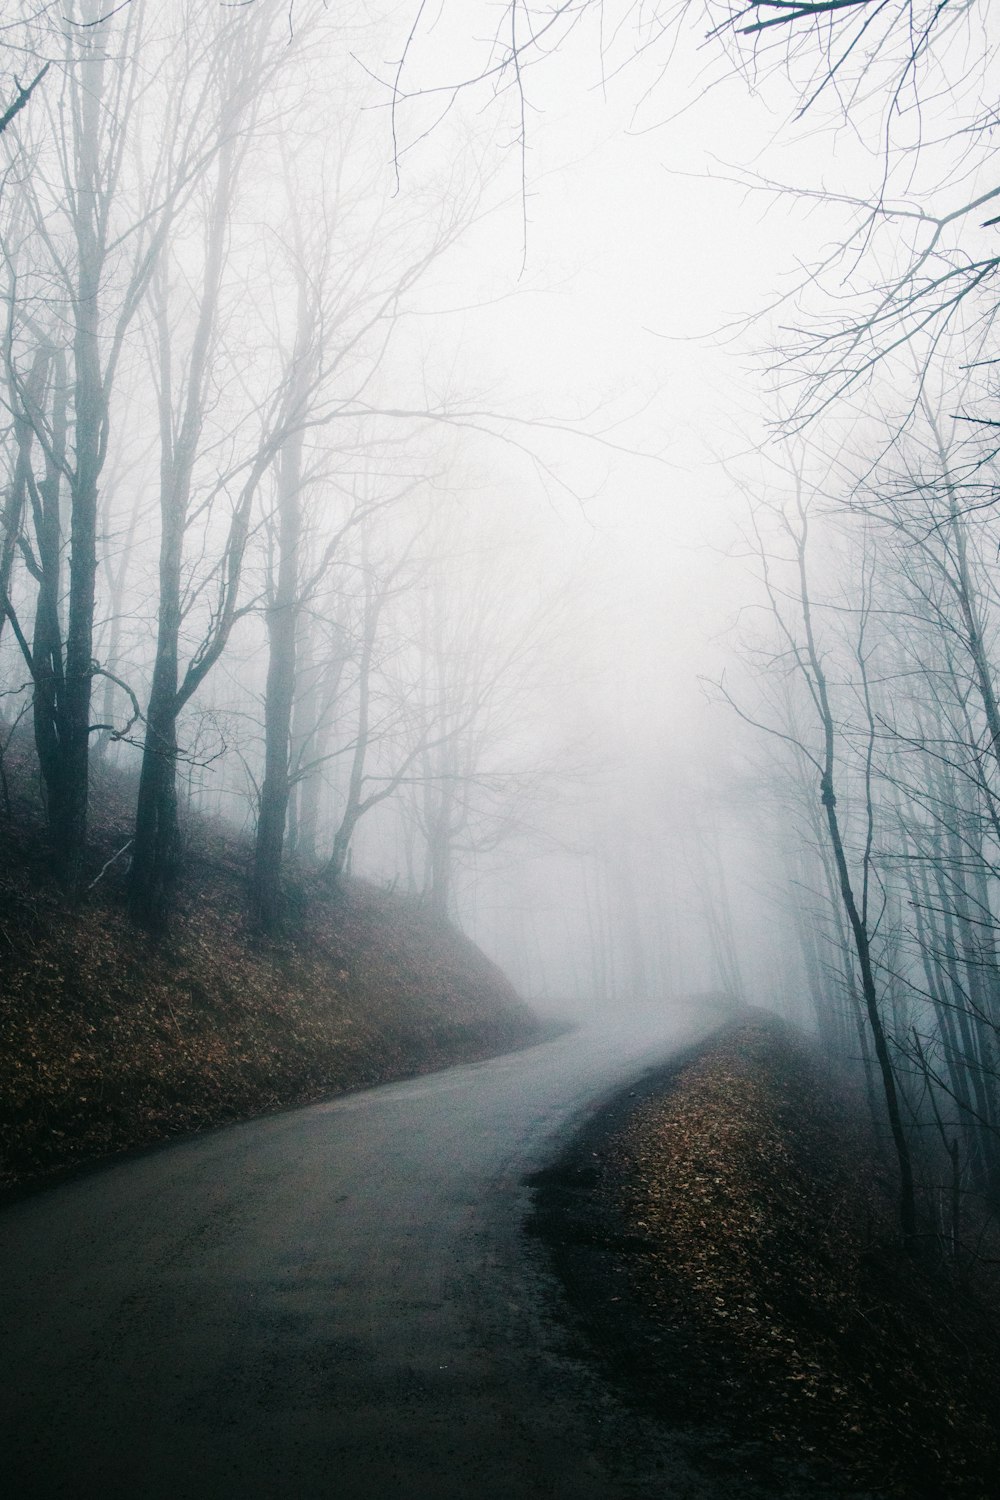 strada vuota attraverso la foresta circondata da nebbie